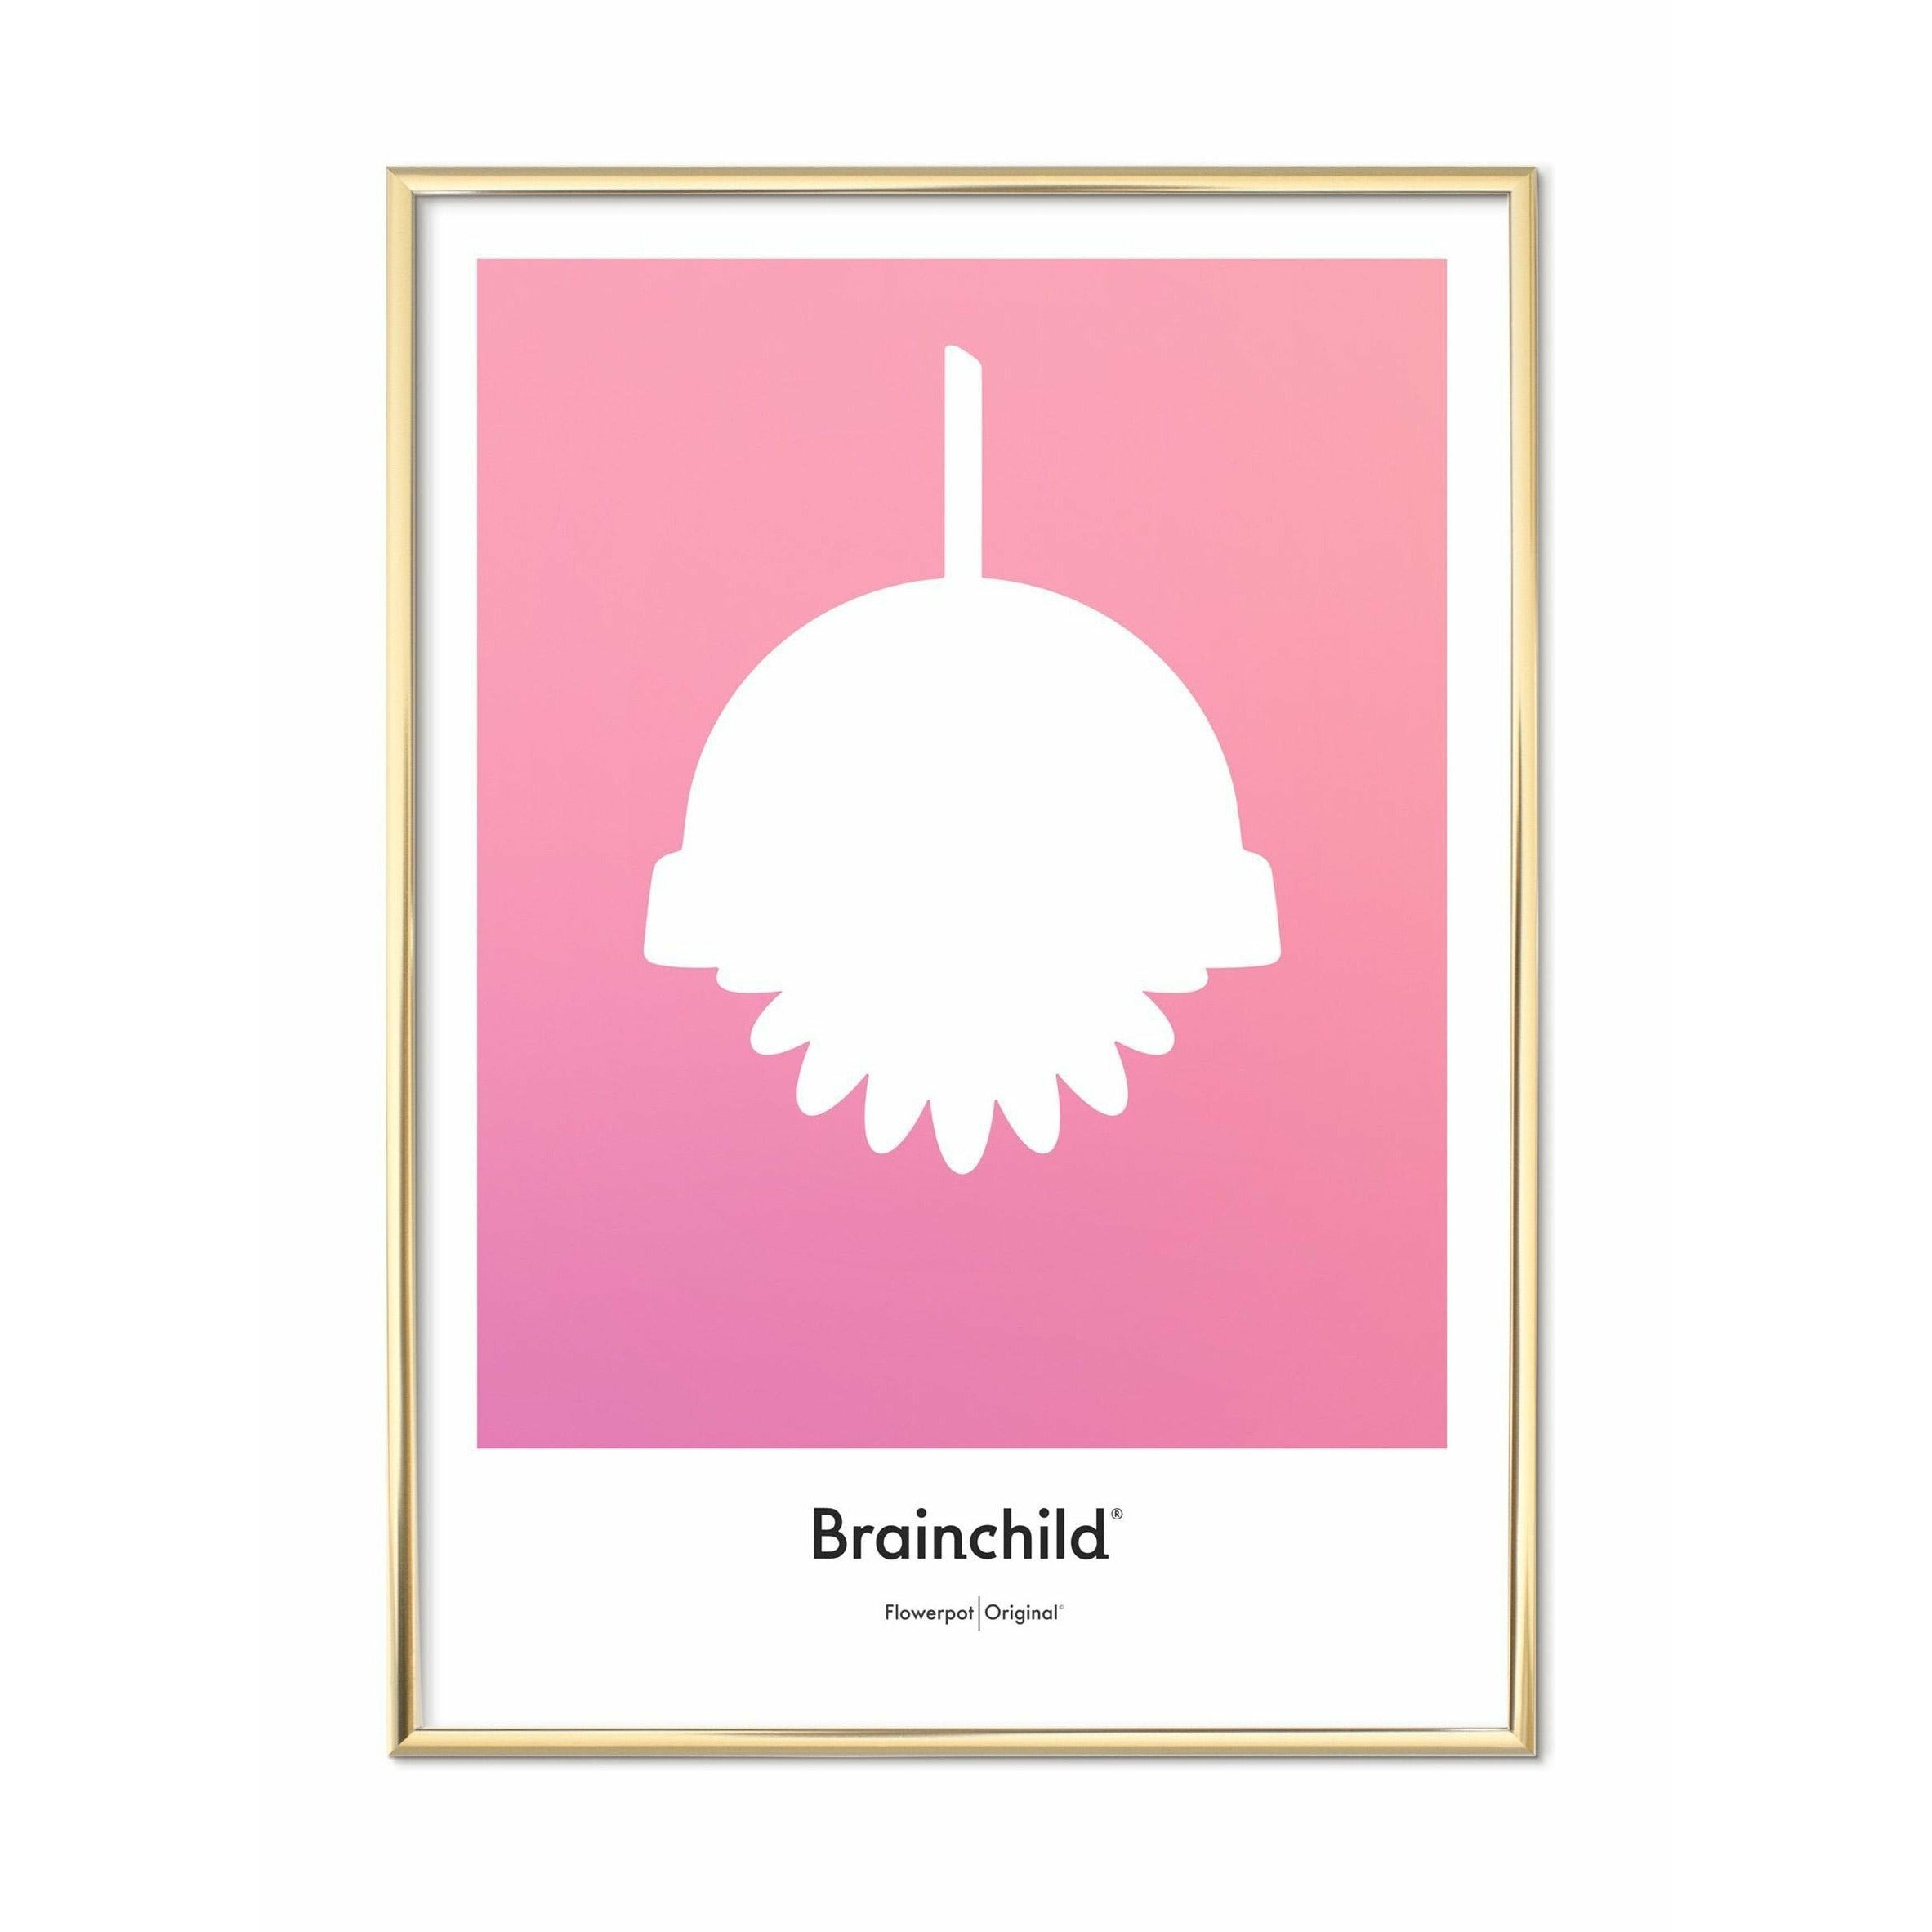 Brainchild Blumentopf Design Icon Poster, Messingrahmen 50 X70 cm, Rosa